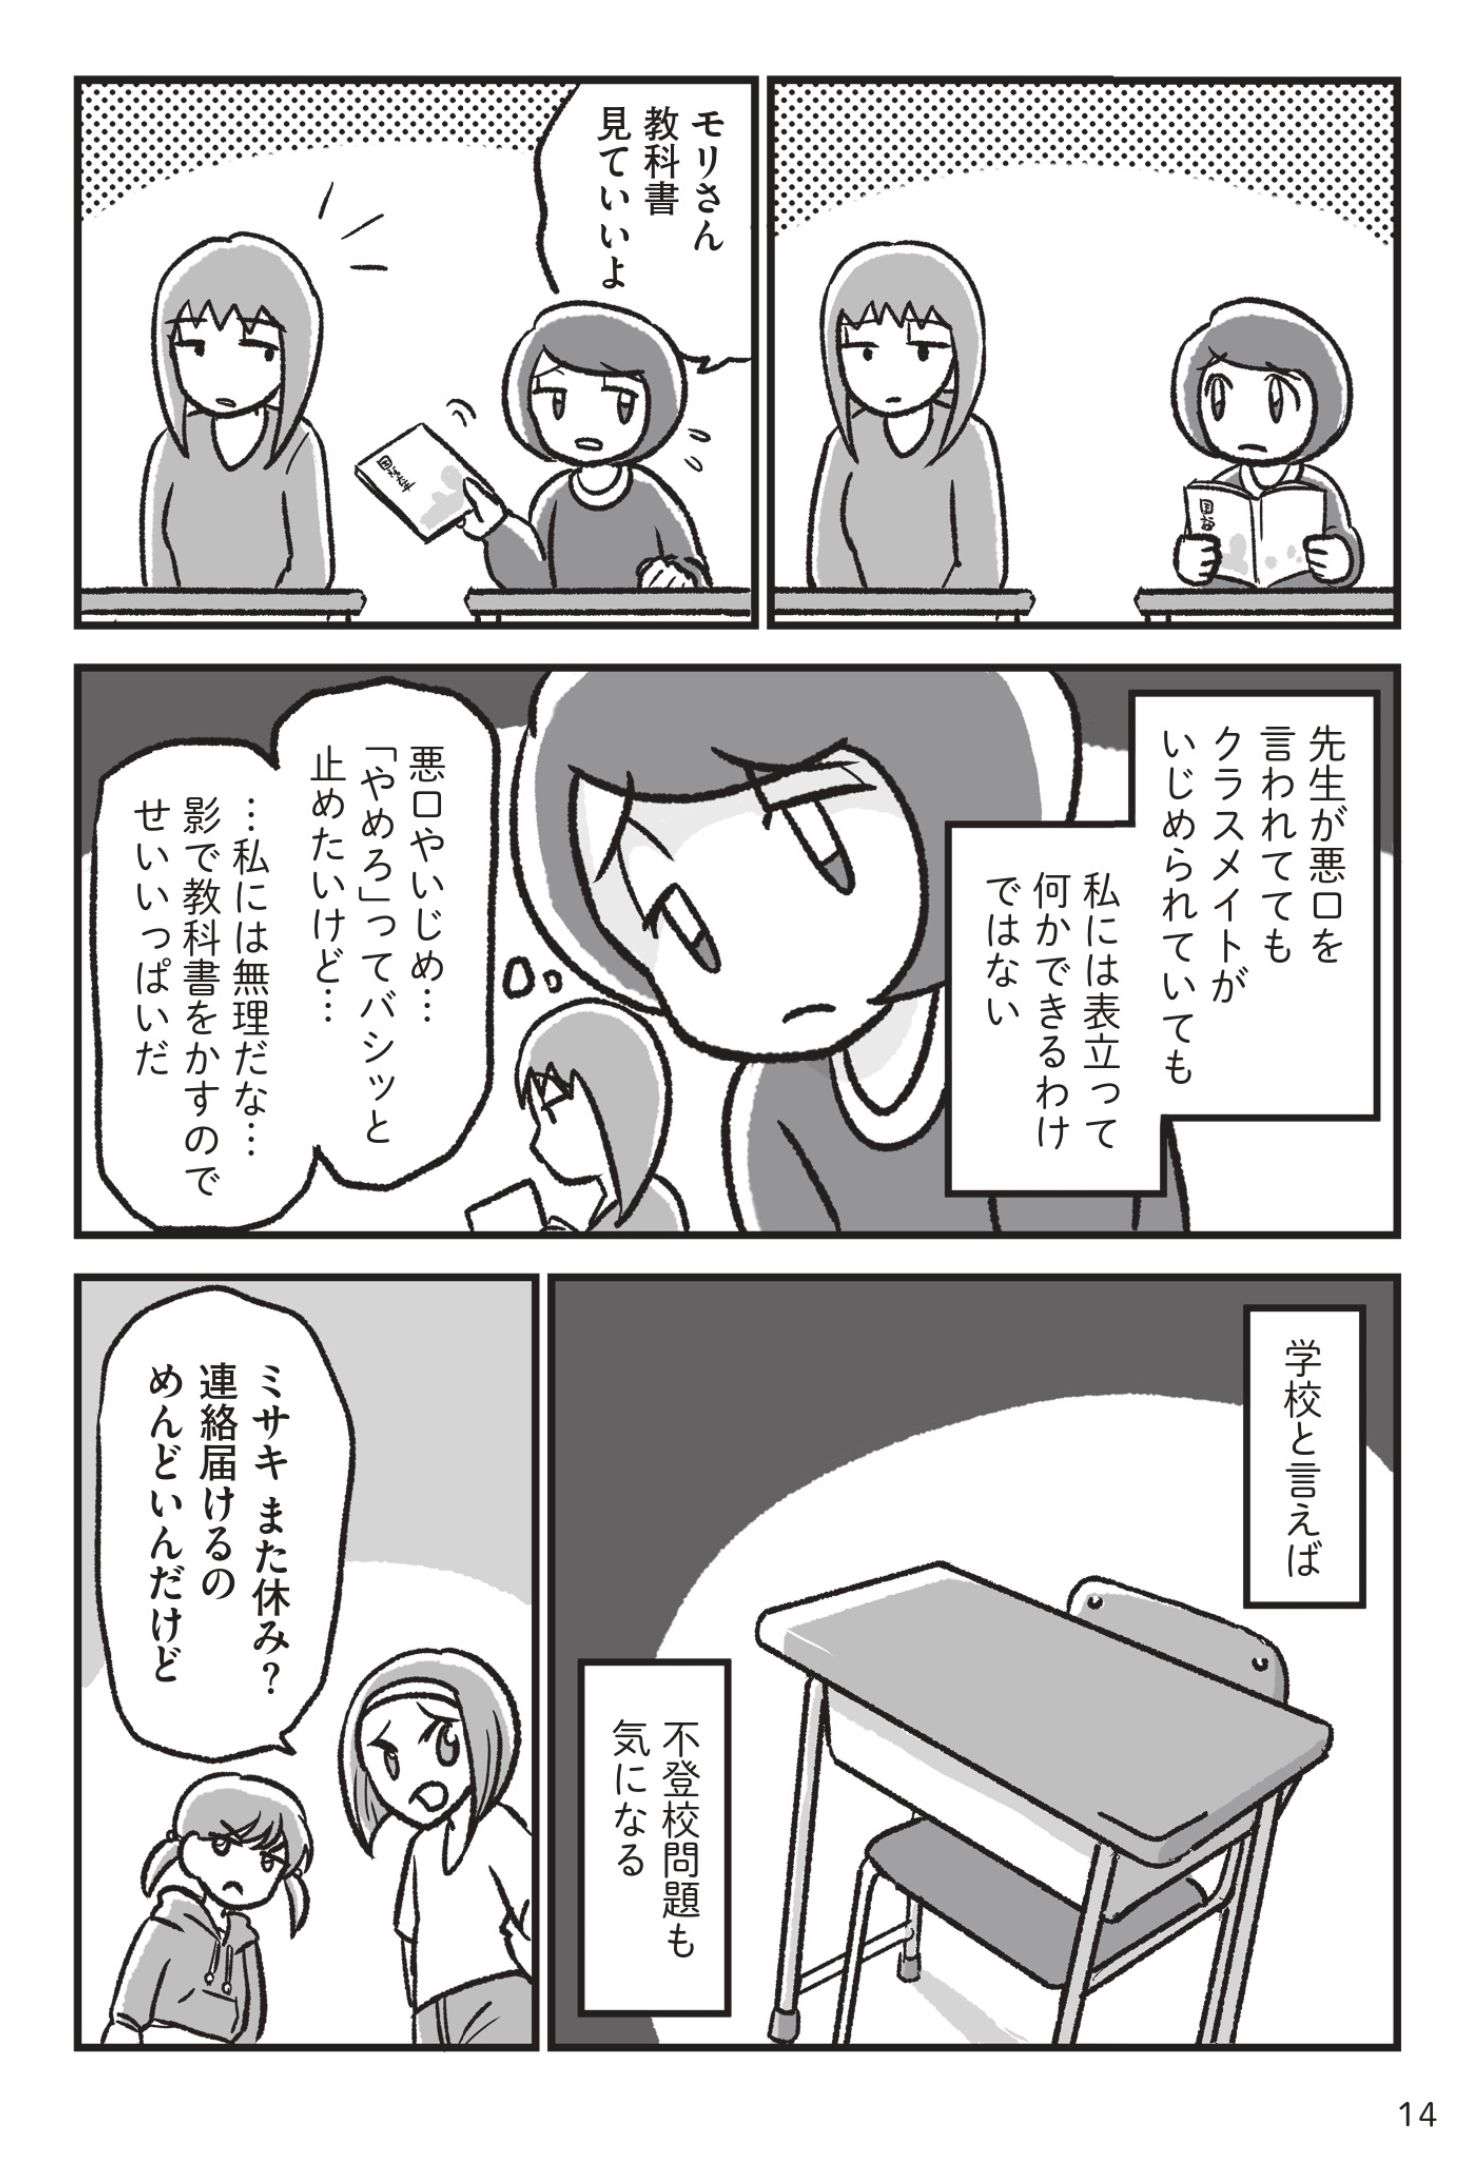 futoko_diary1_3.jpg